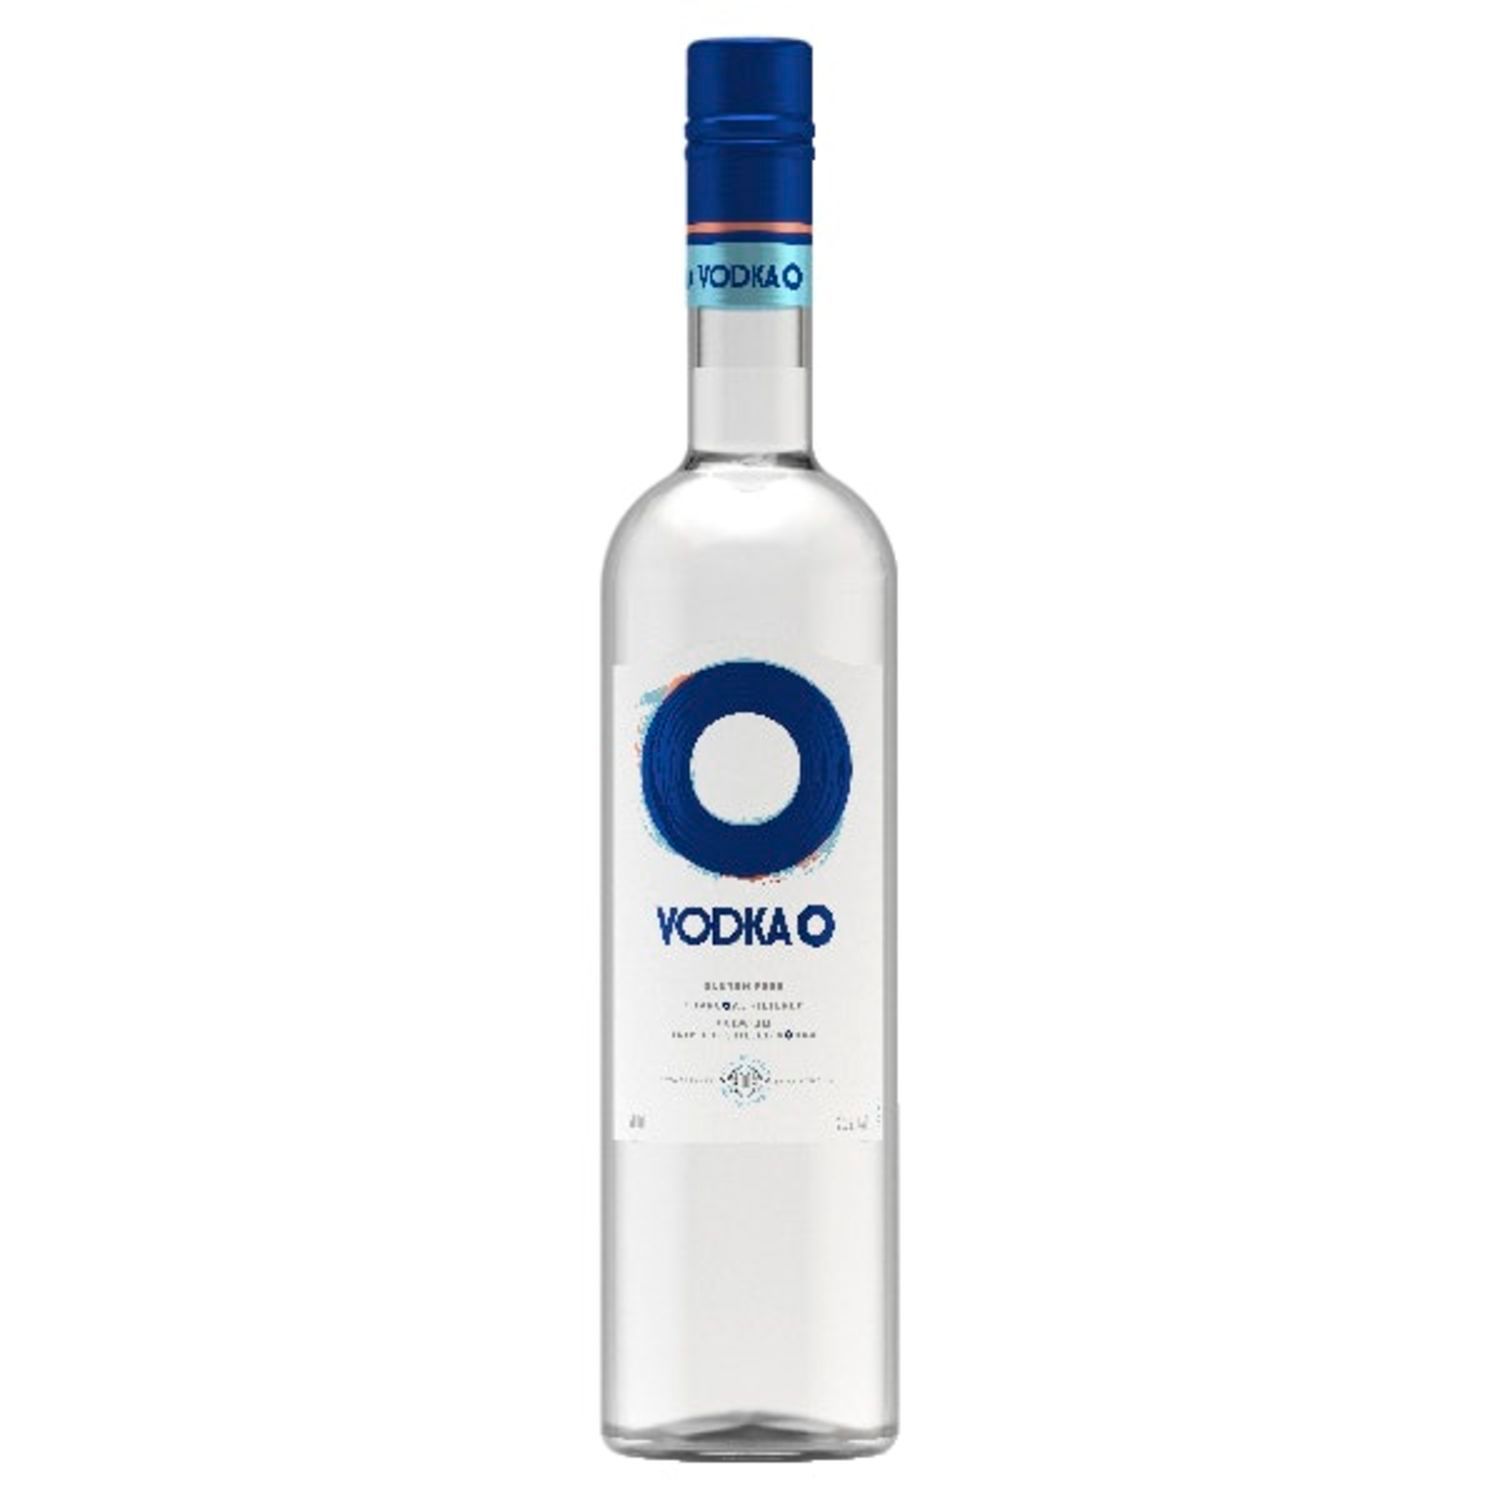 Vodka O Vodka 1L Bottle